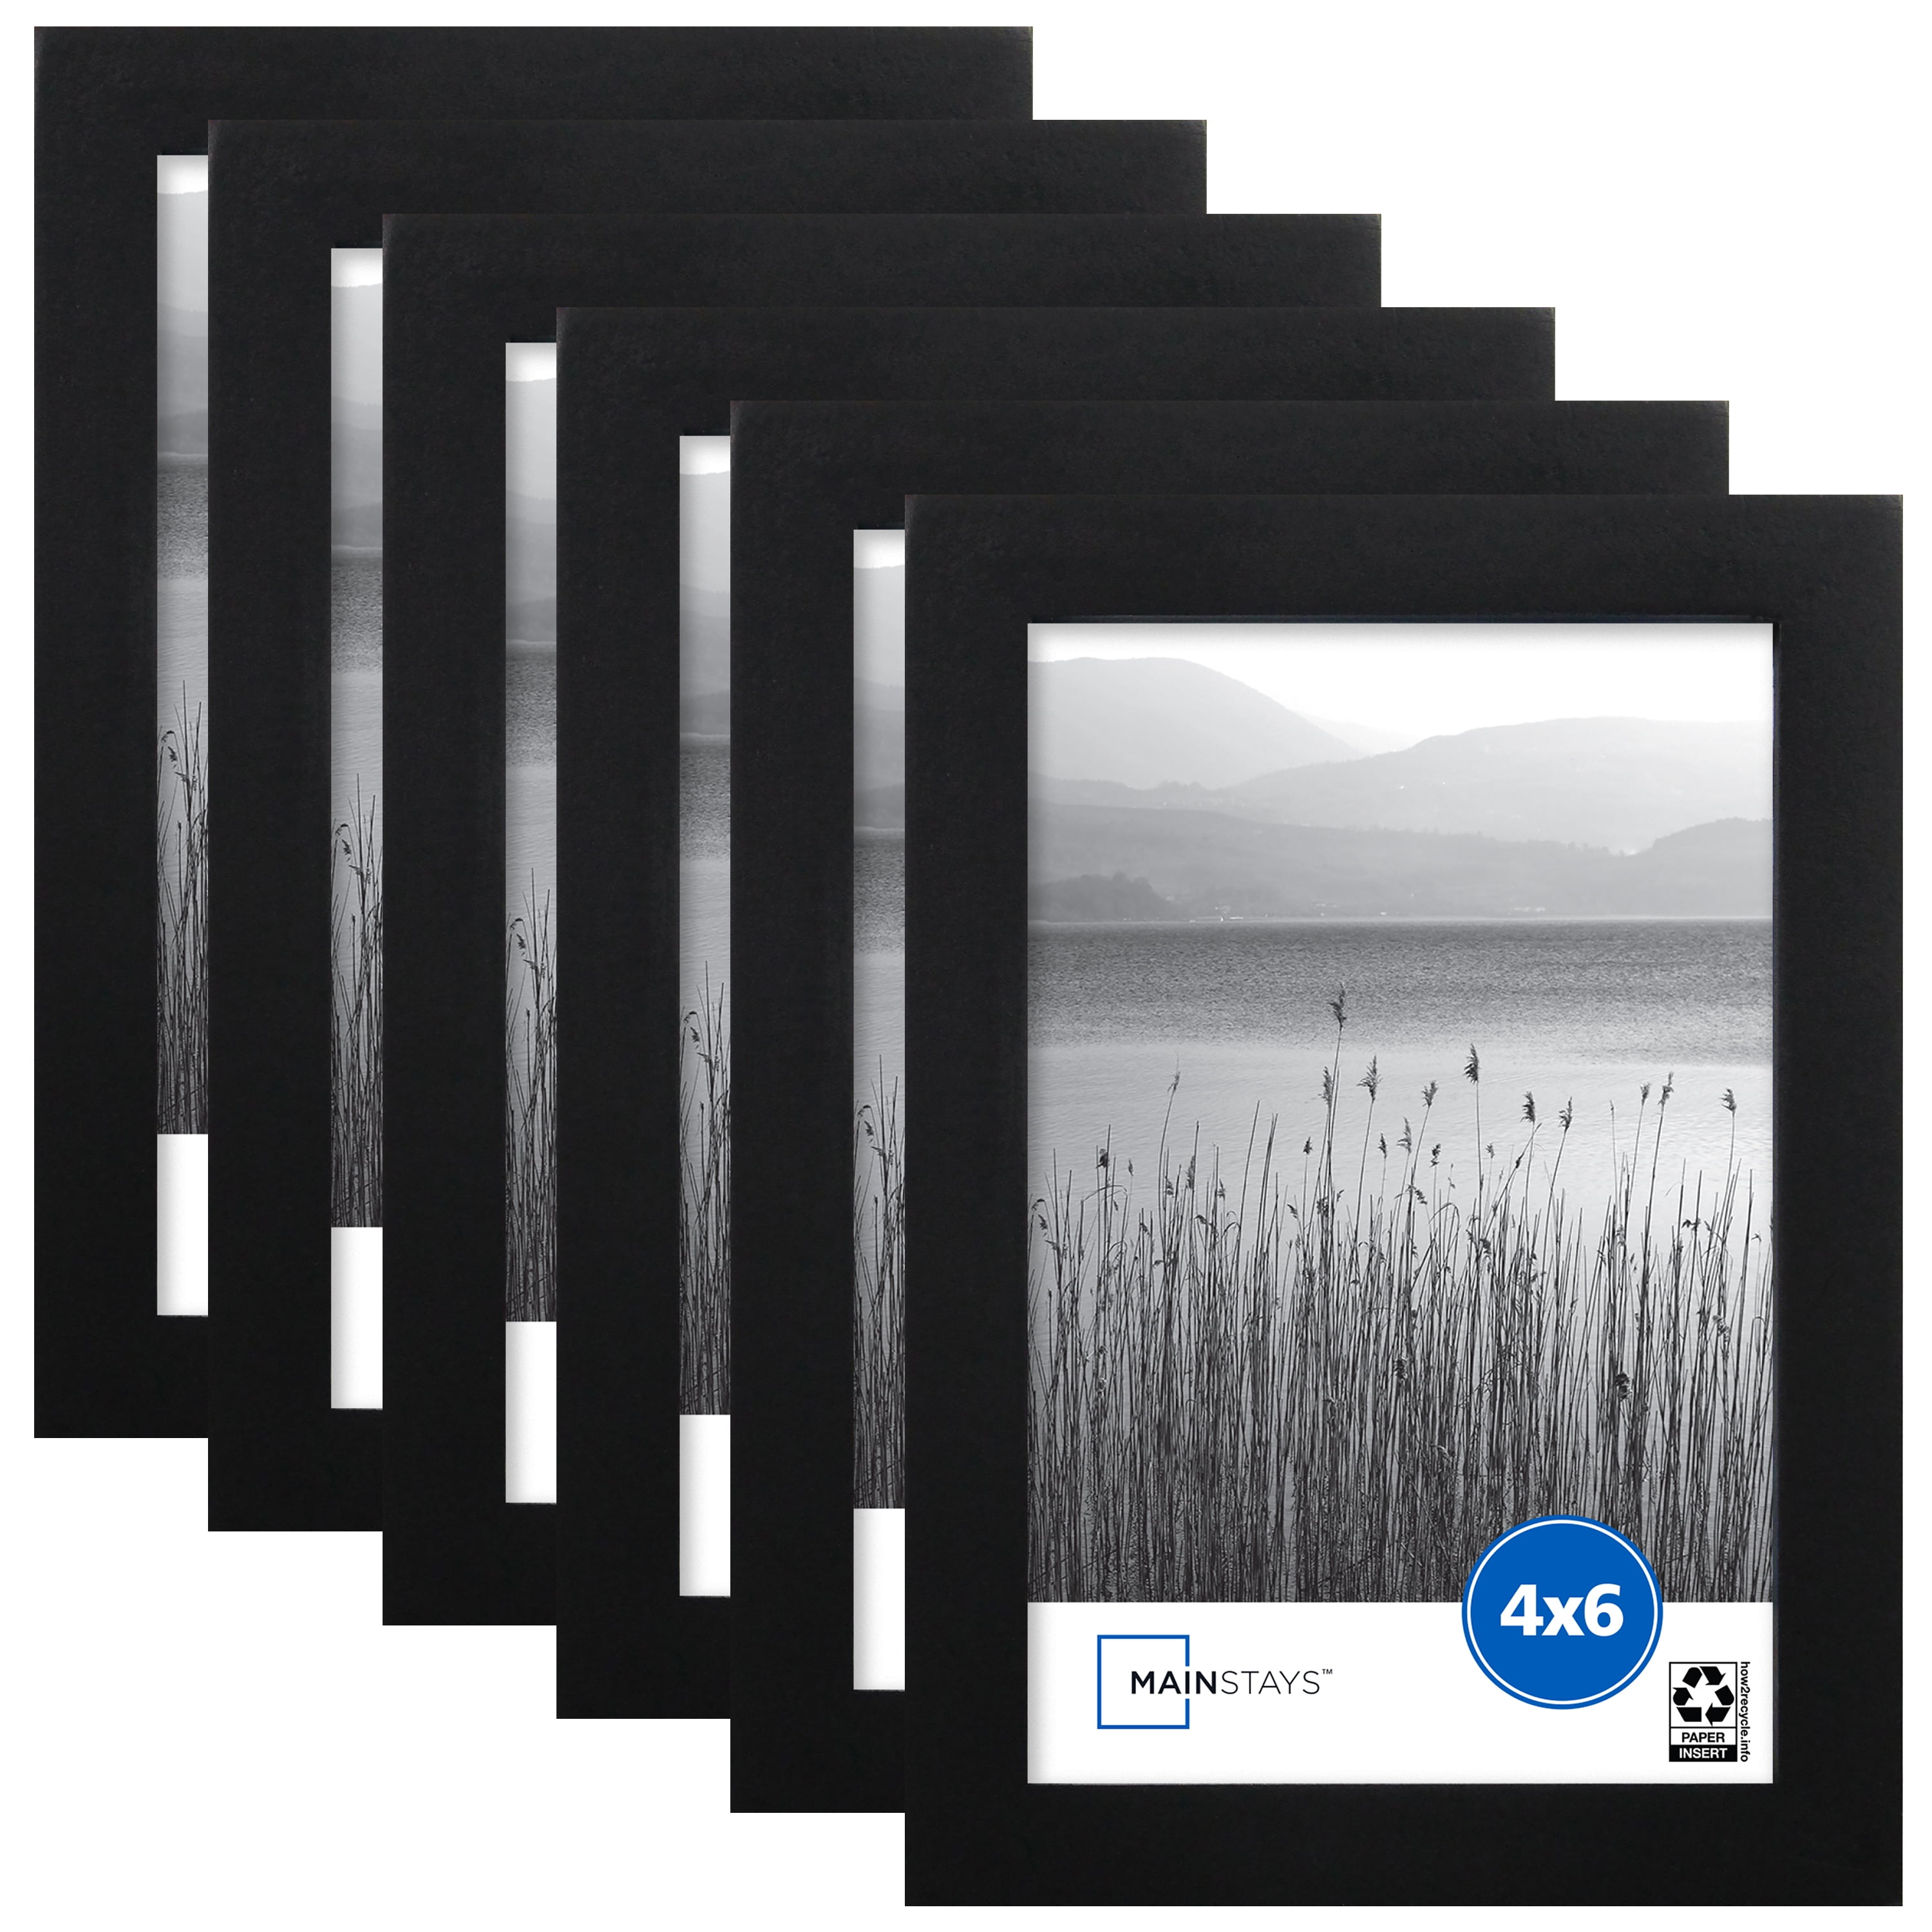 Details about   Cavepop 8x10” Black Wood Textured Picture Frames Set of 15 